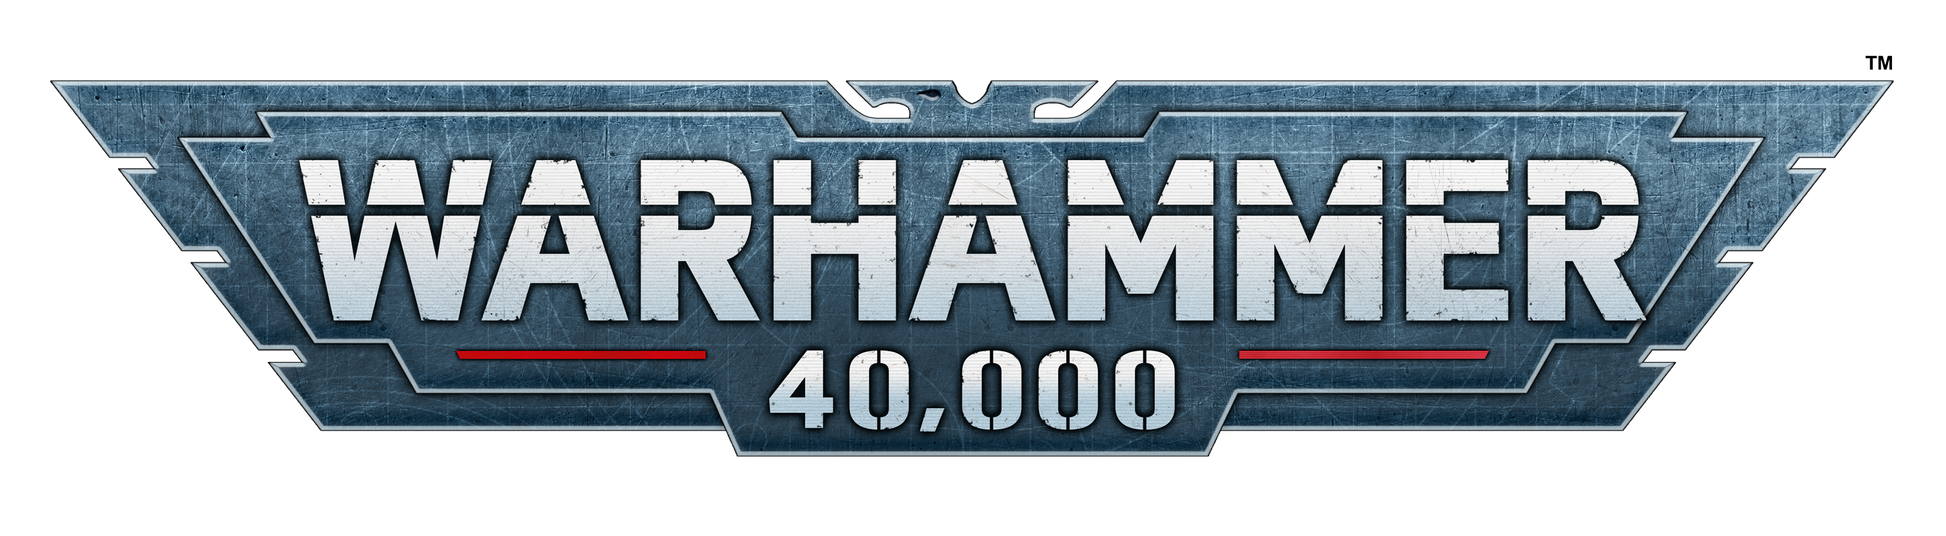 Warhammer 40K Tyranids Neurolicter